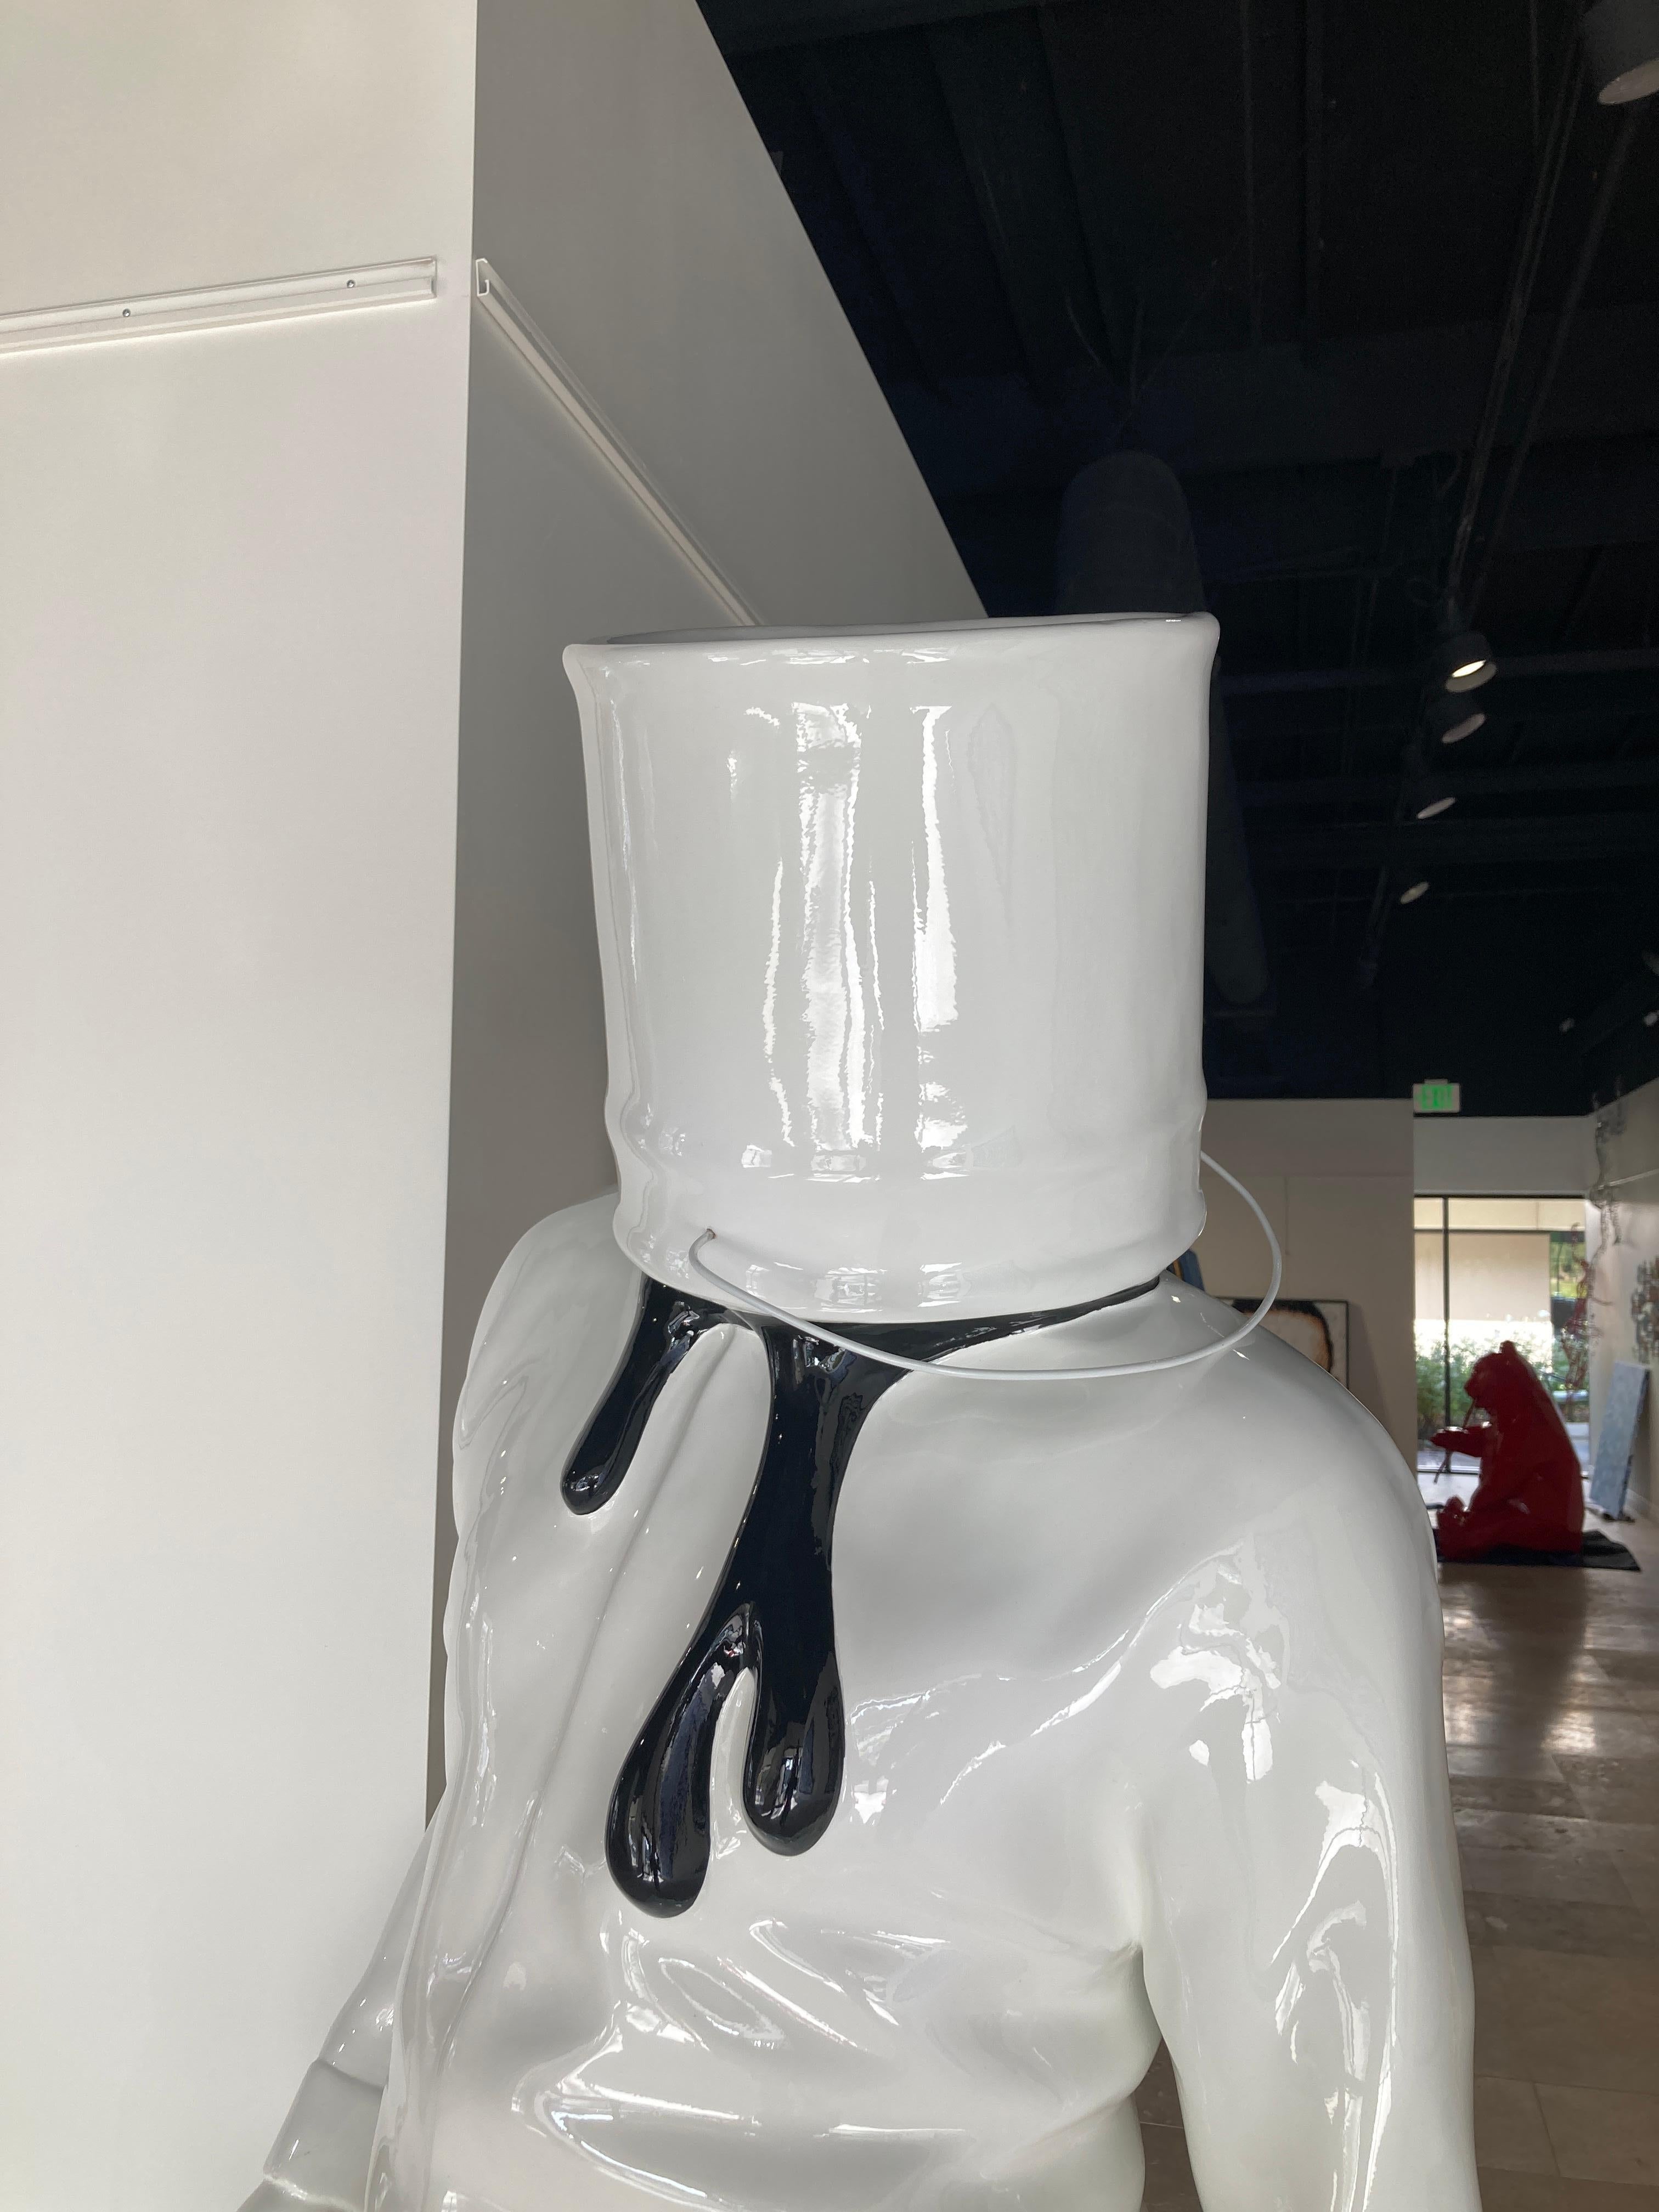 Shopping Man in Art - Blanc et Noir  - Sculpture by David David